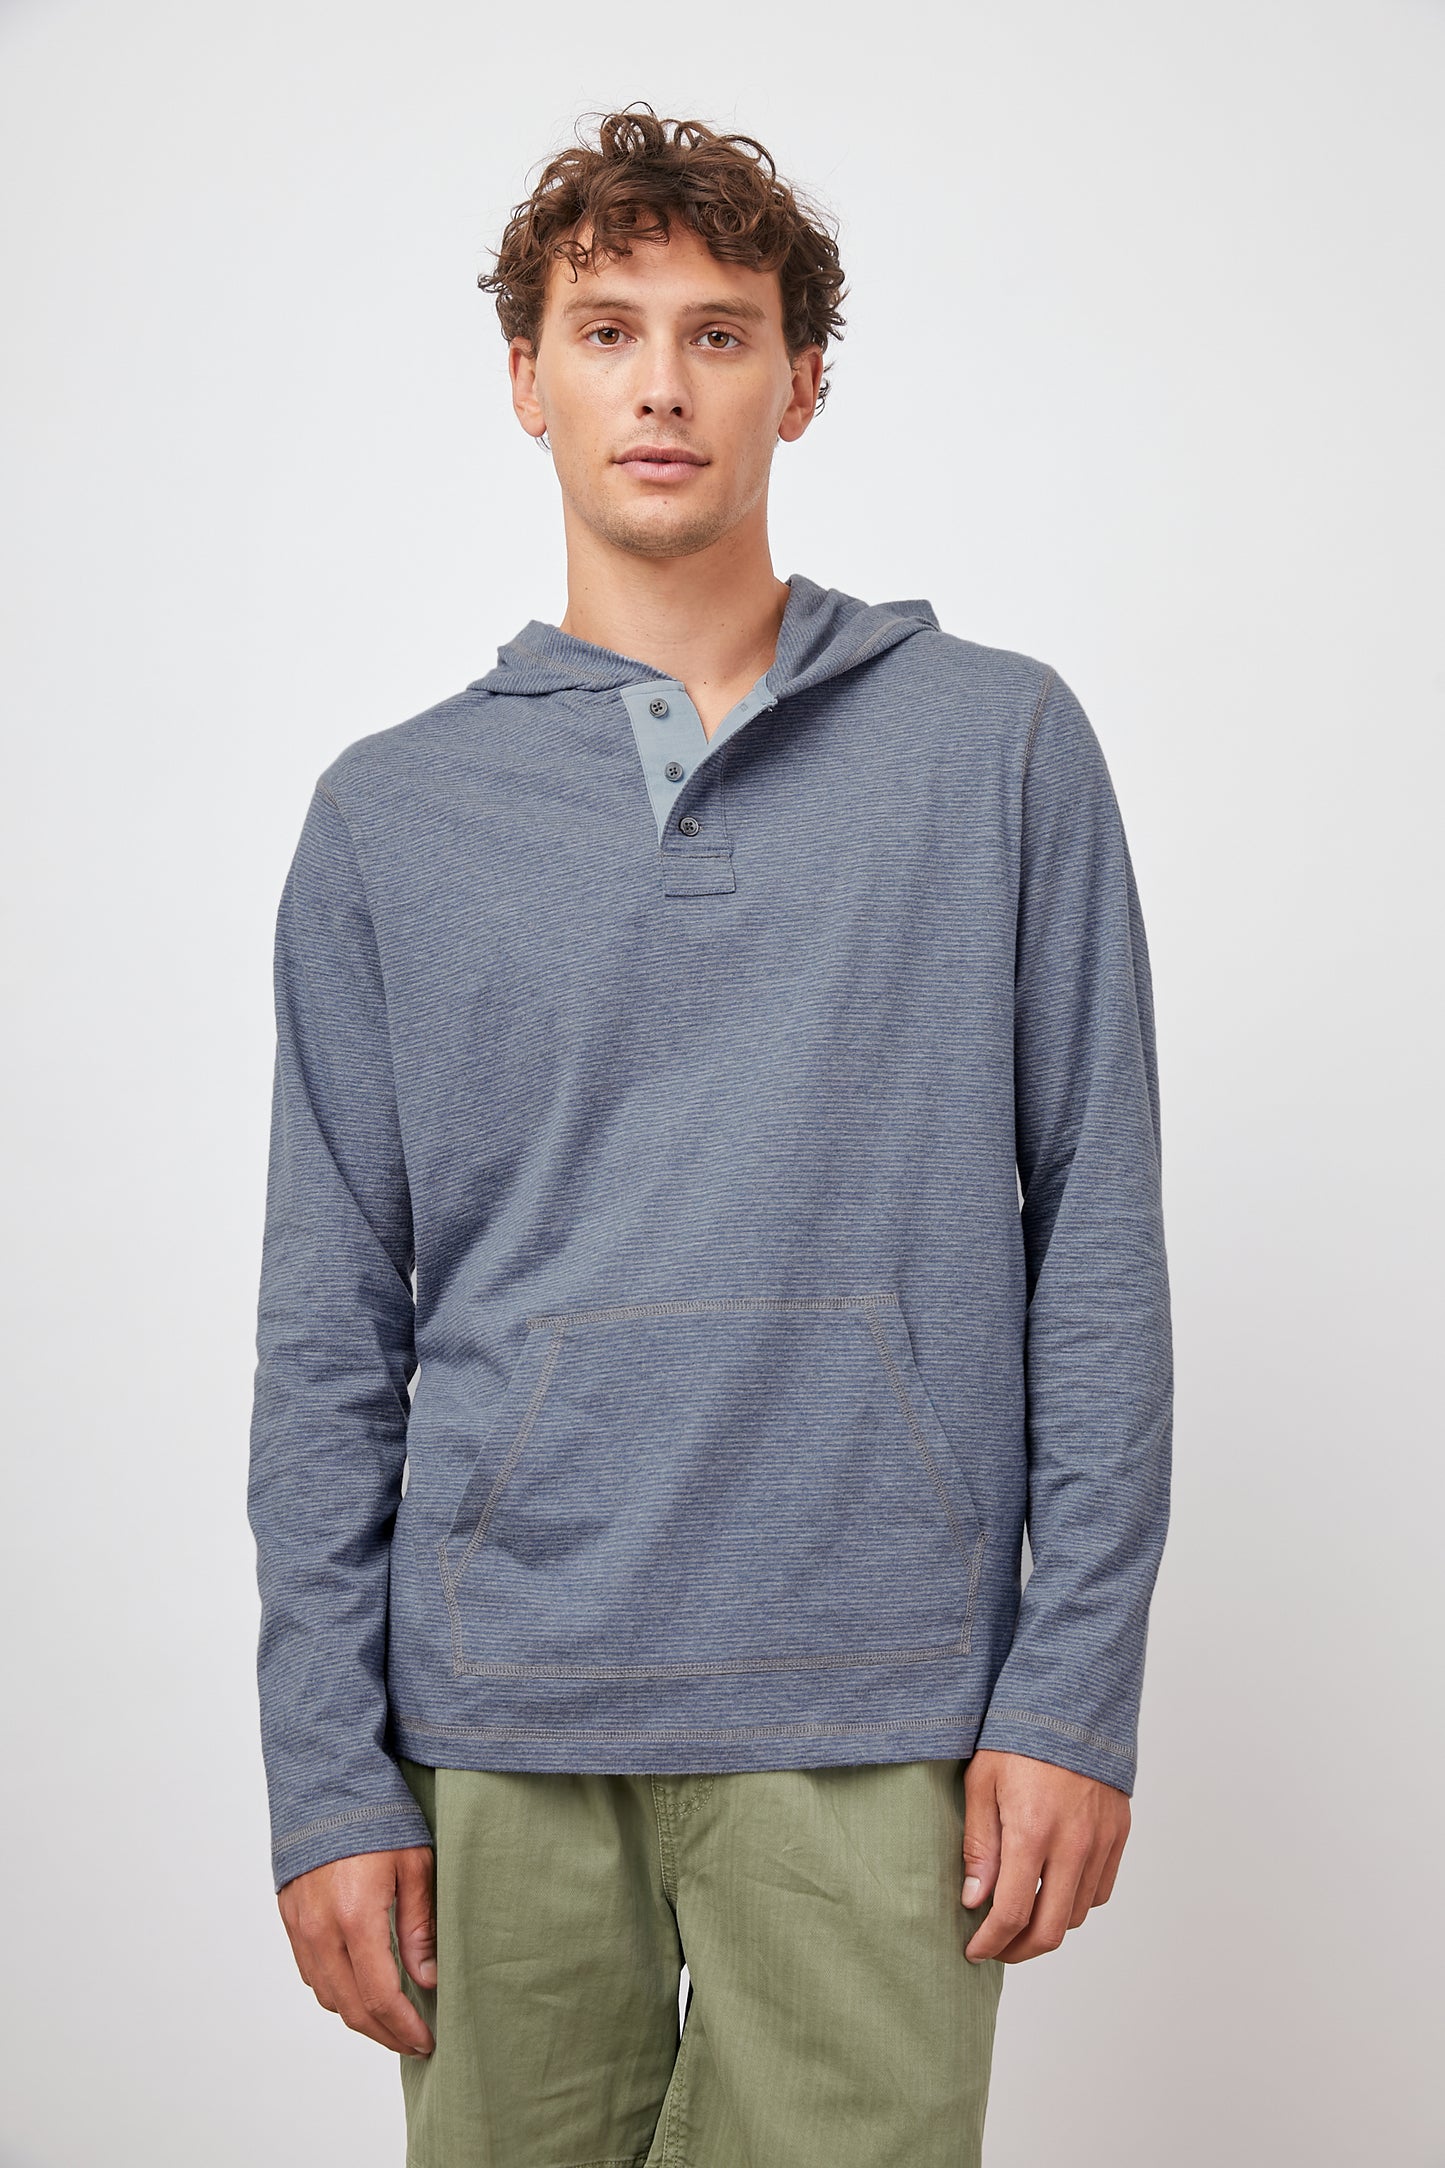 Weston Bay Stripe Pullover Sweatshirt